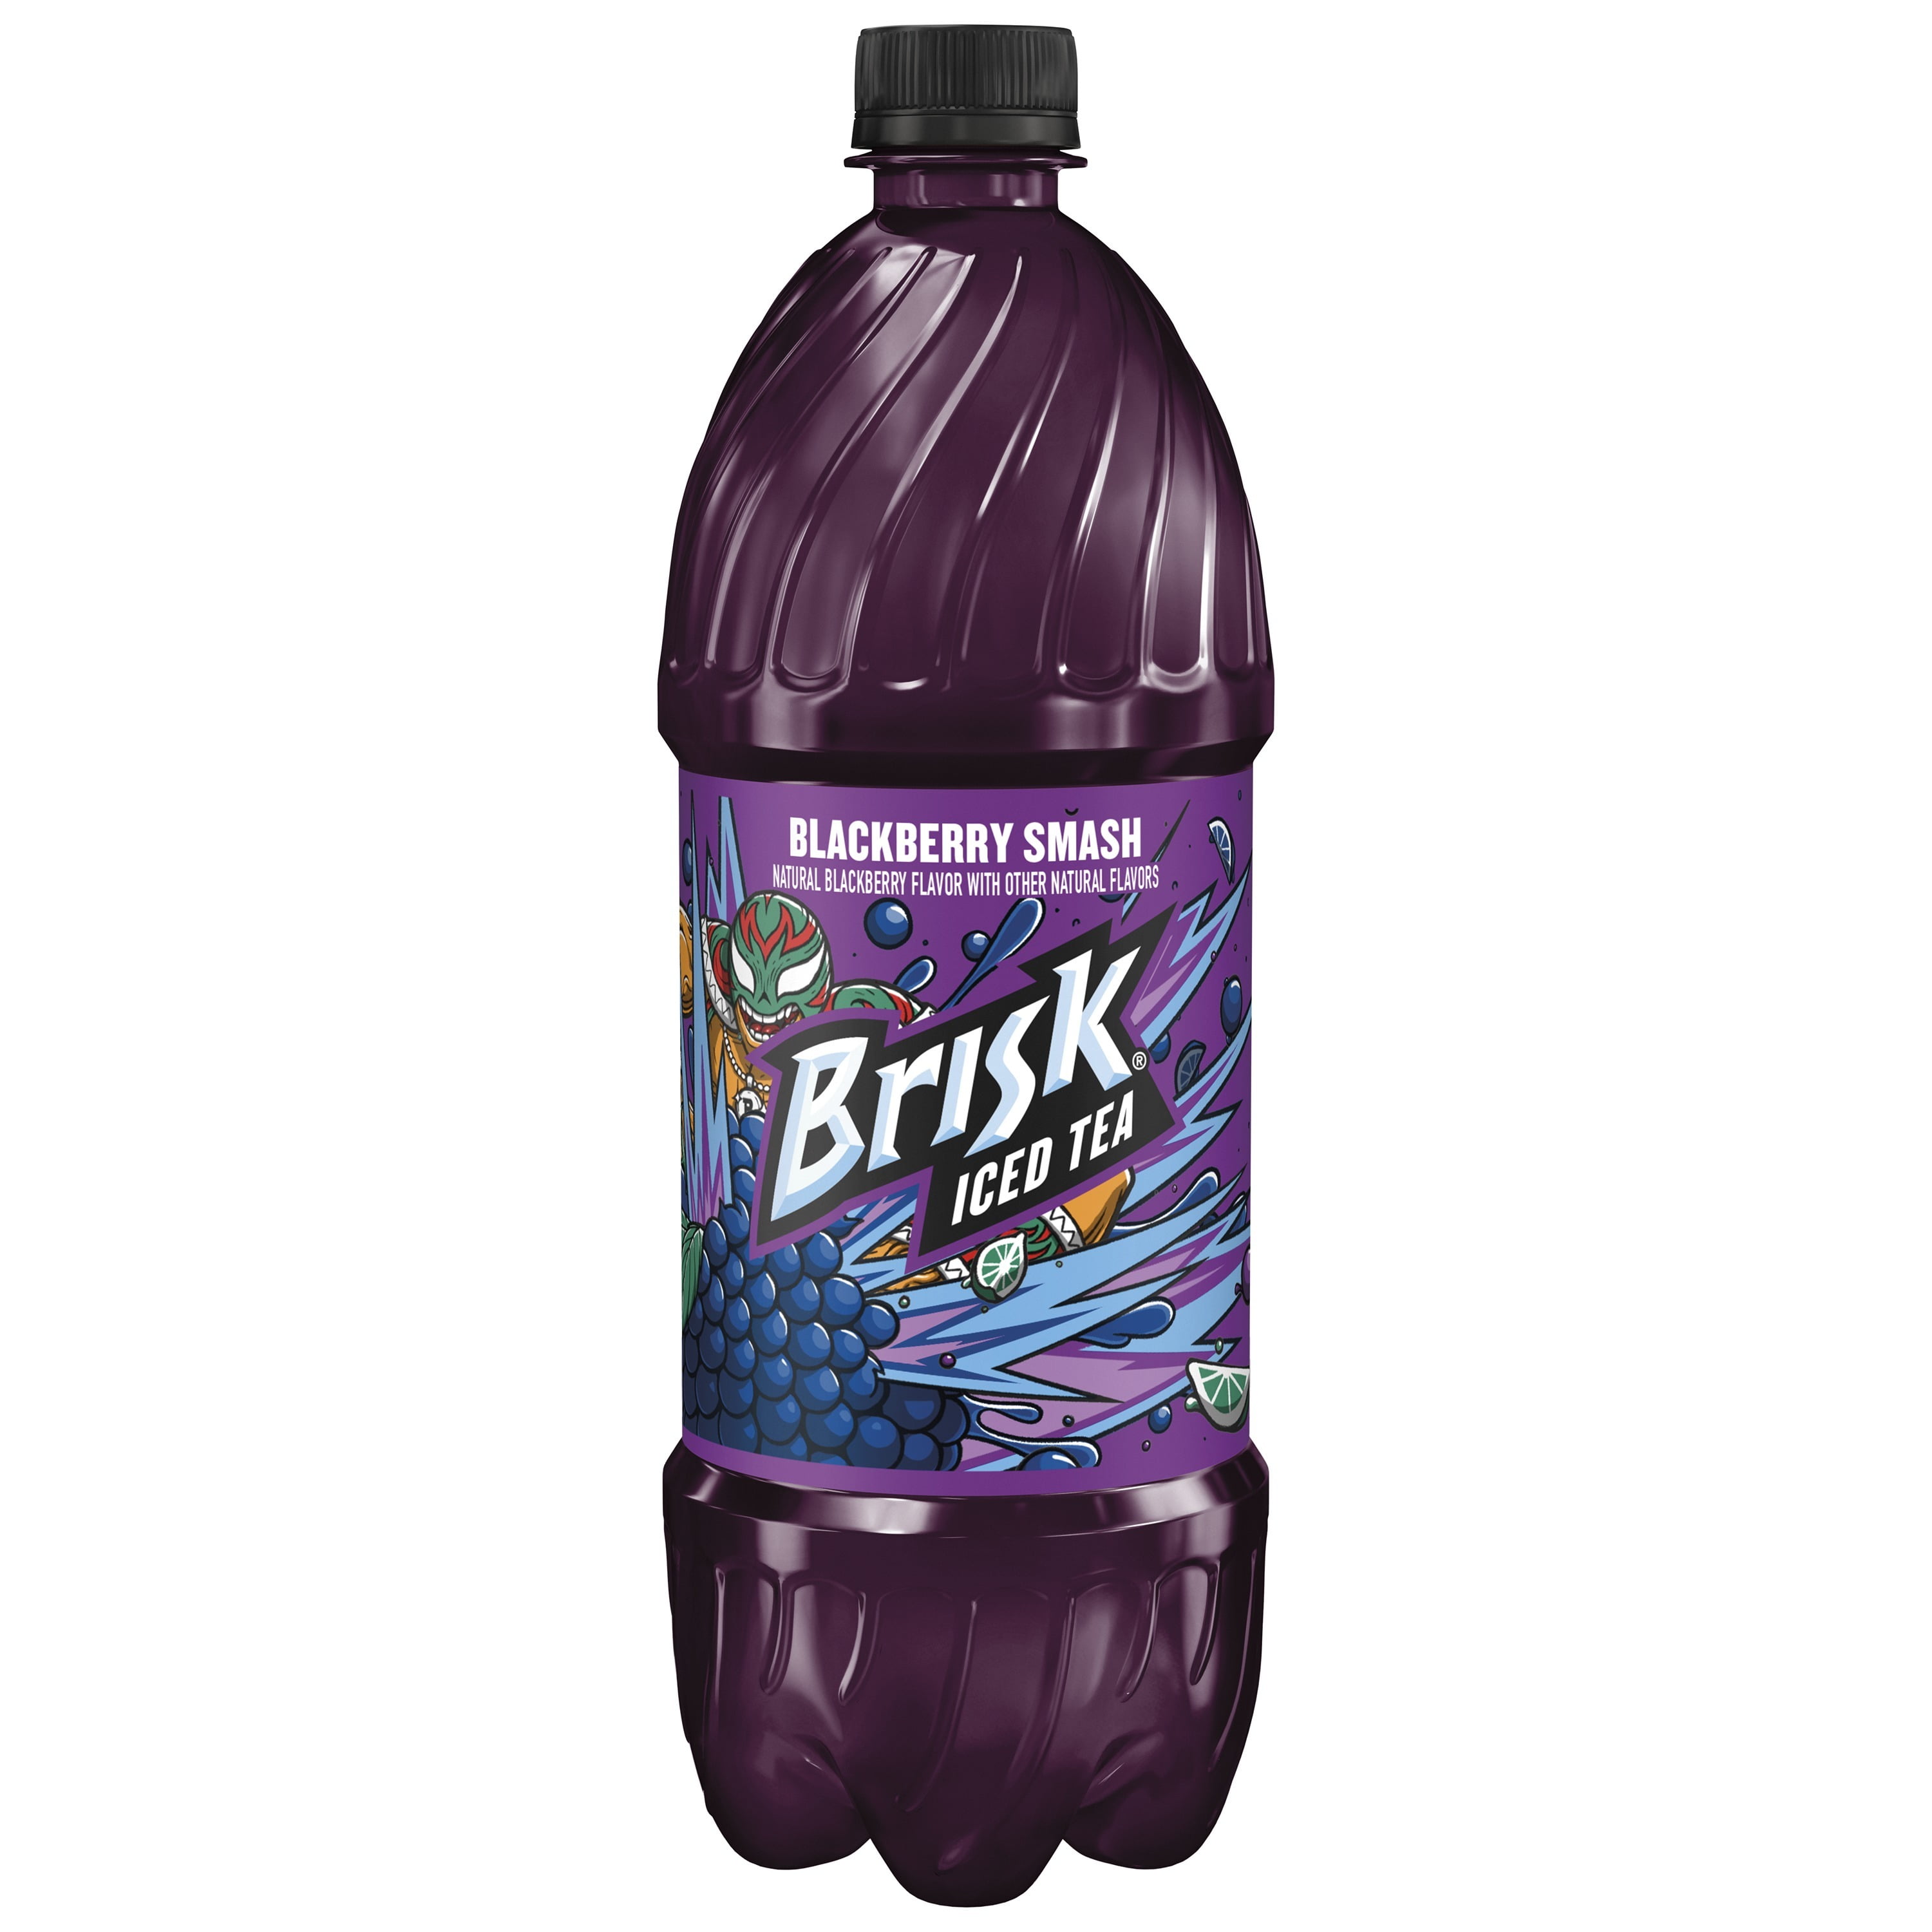 Brisk Iced Tea Blackberry Smash Juice 1 Liter Bottle